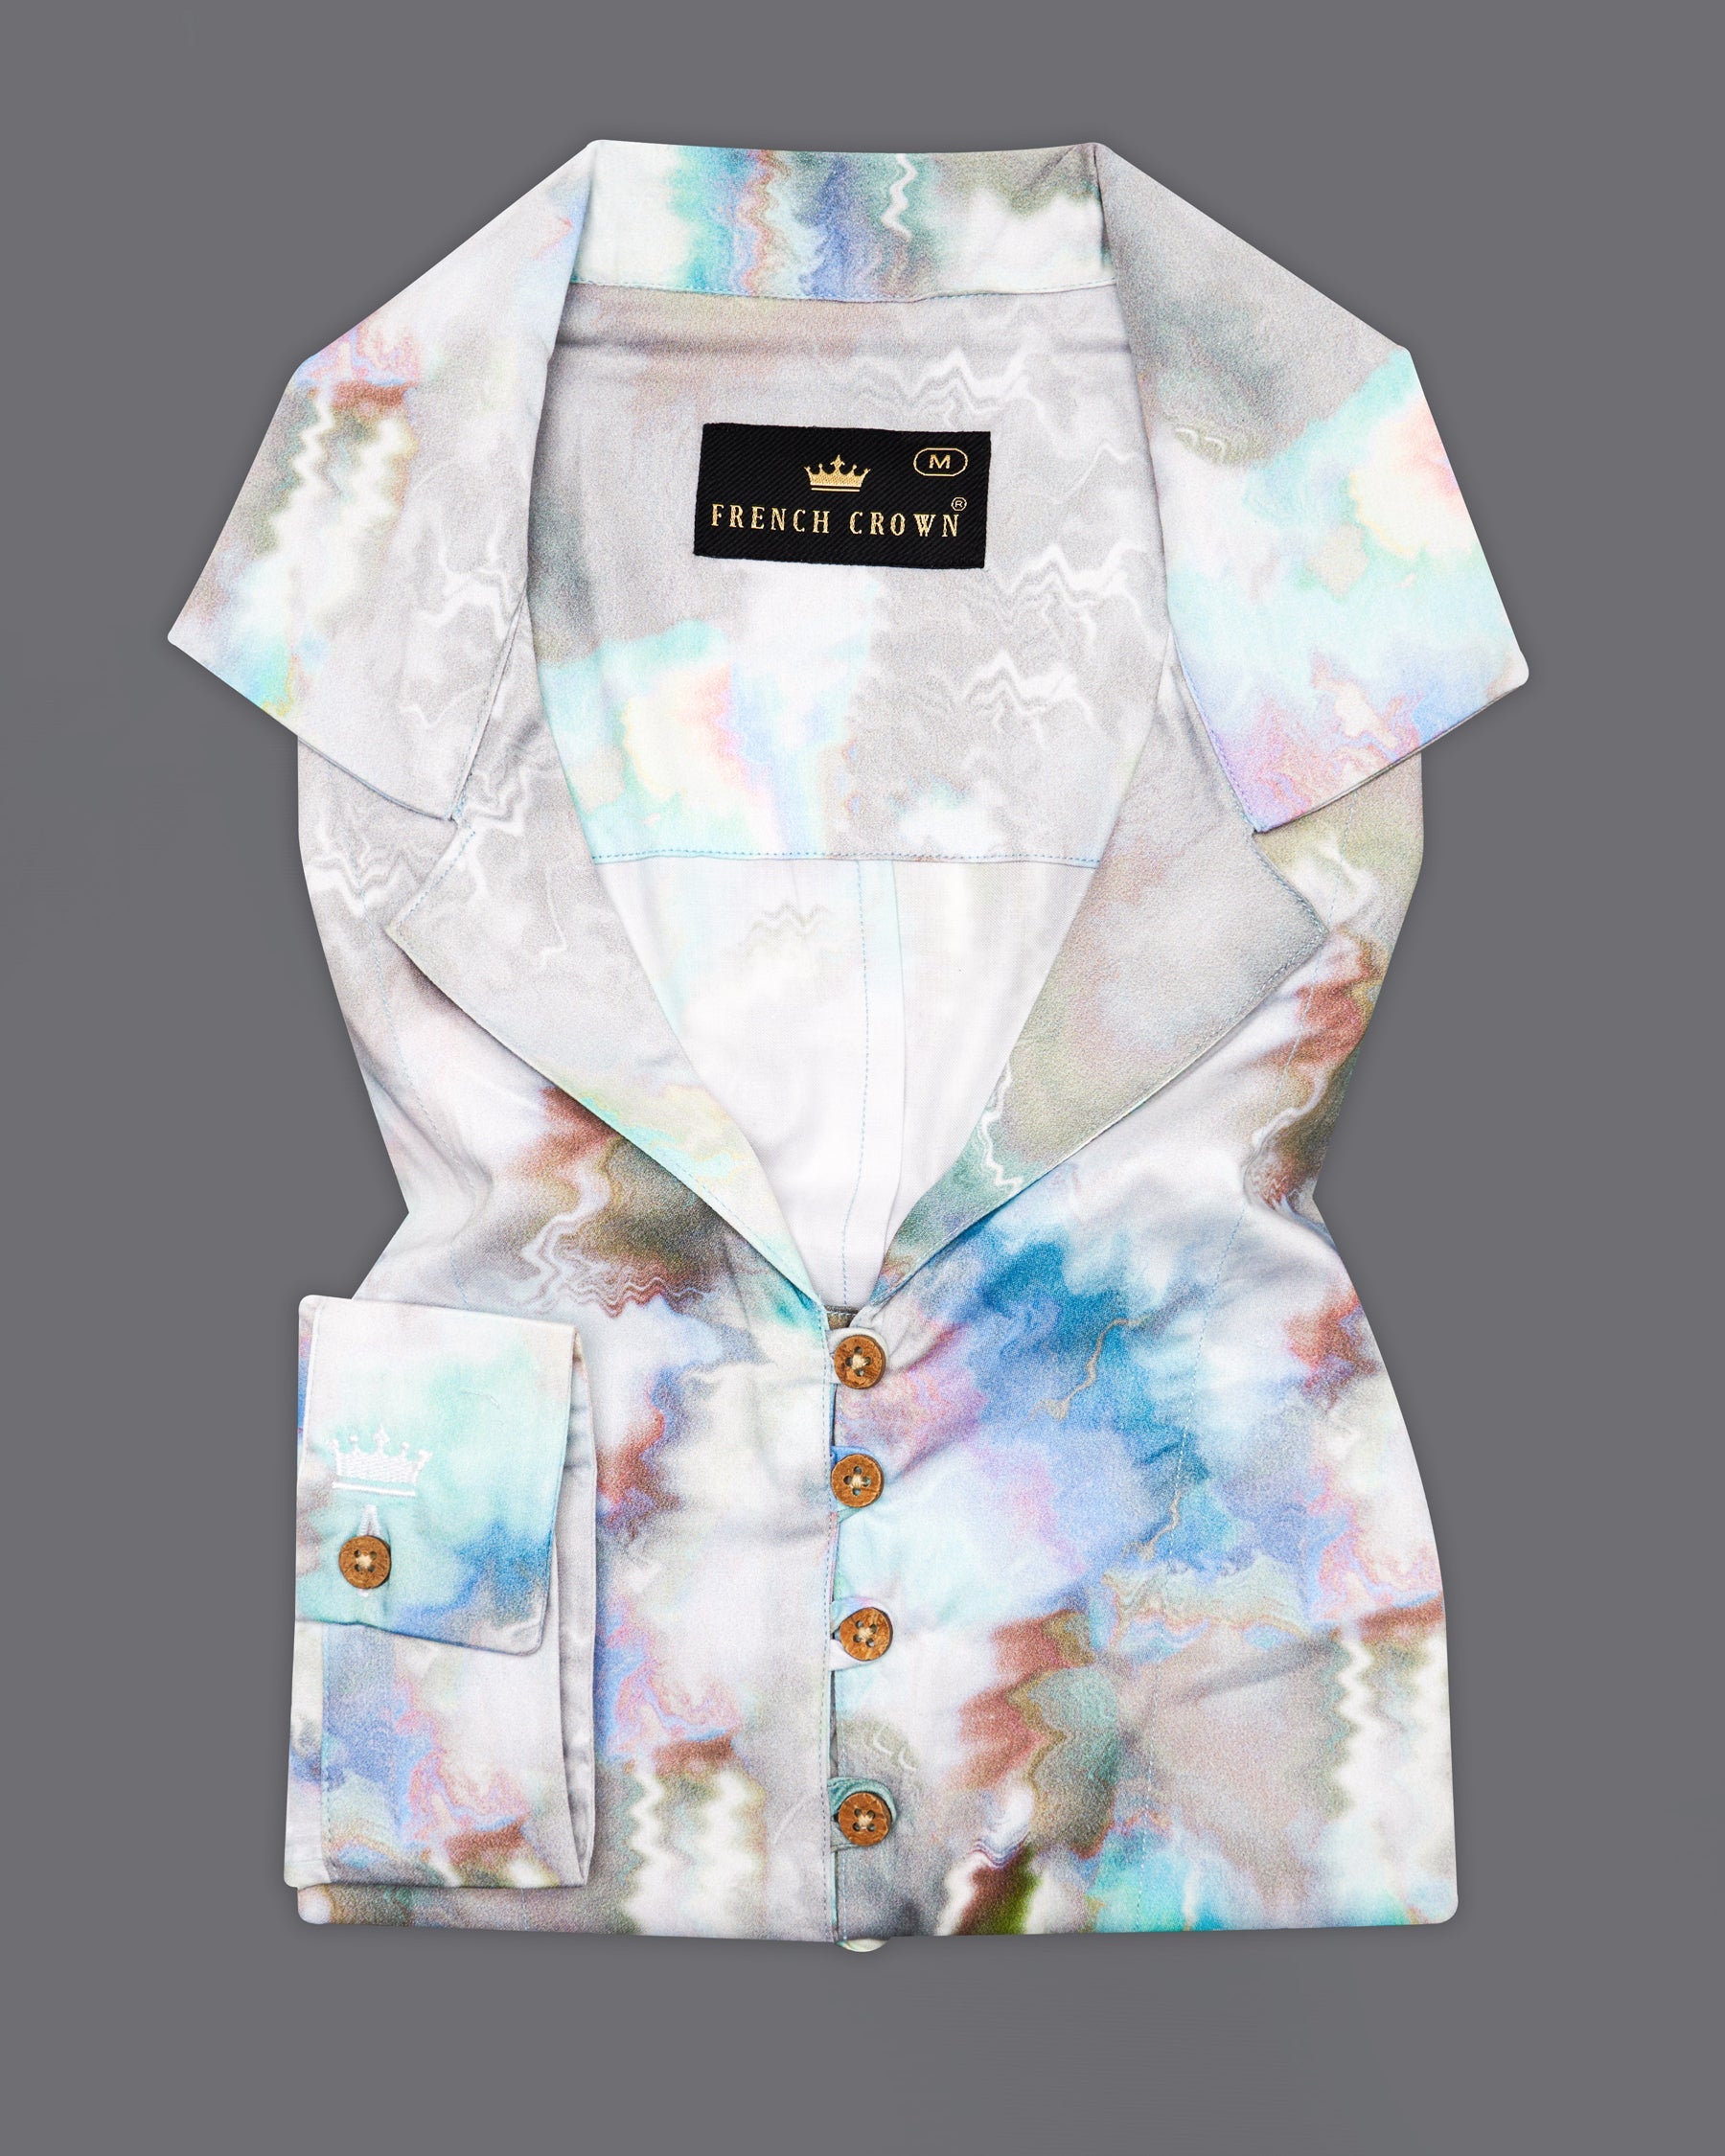 Bright White with Marble Printed Super Soft Premium Cotton Women’s Shirt WS064-32, WS064-34, WS064-36, WS064-38, WS064-40, WS064-42